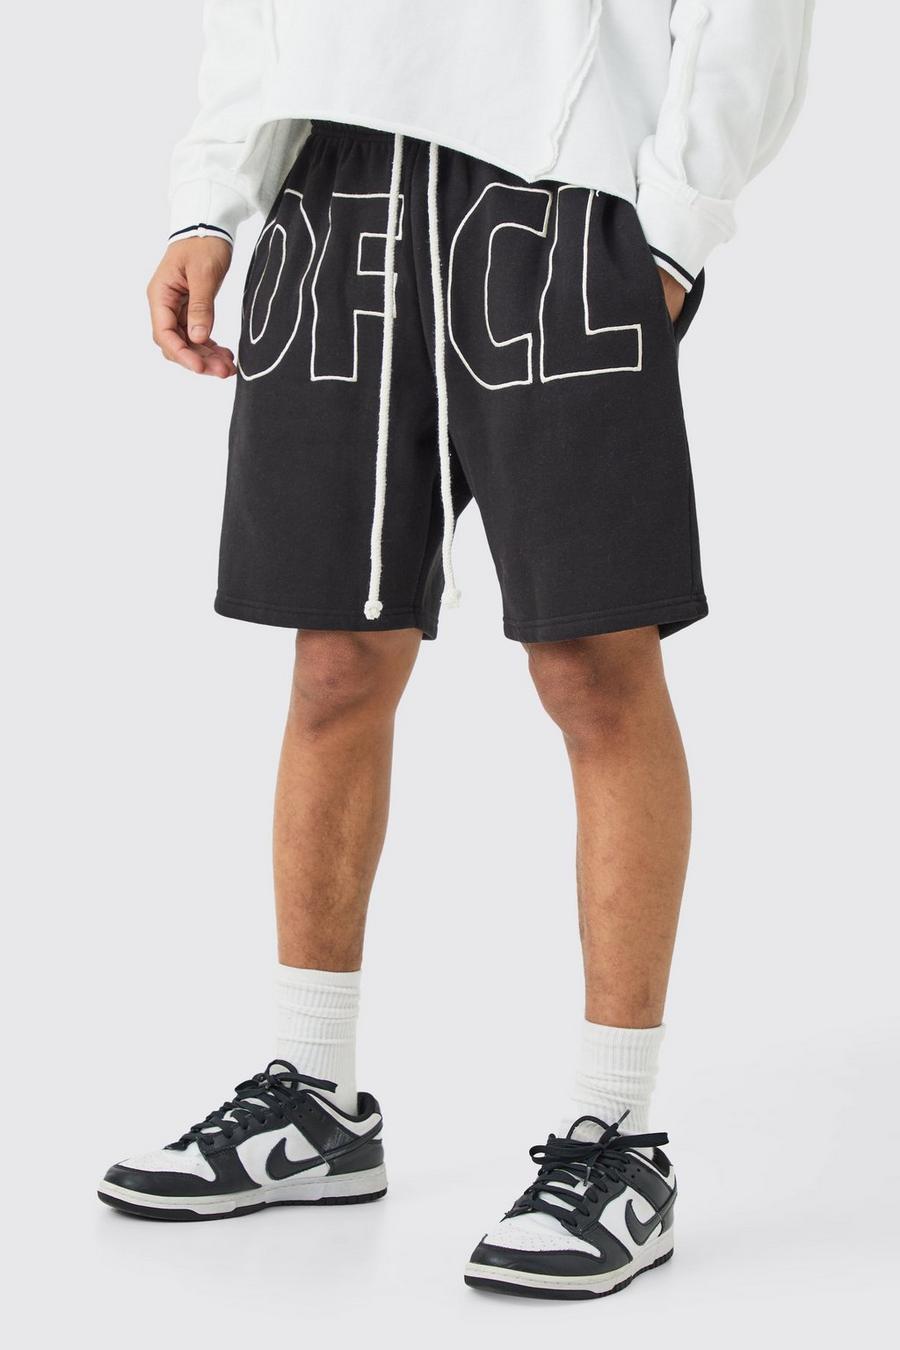 Lockere Shorts mit Official-Applique, Black